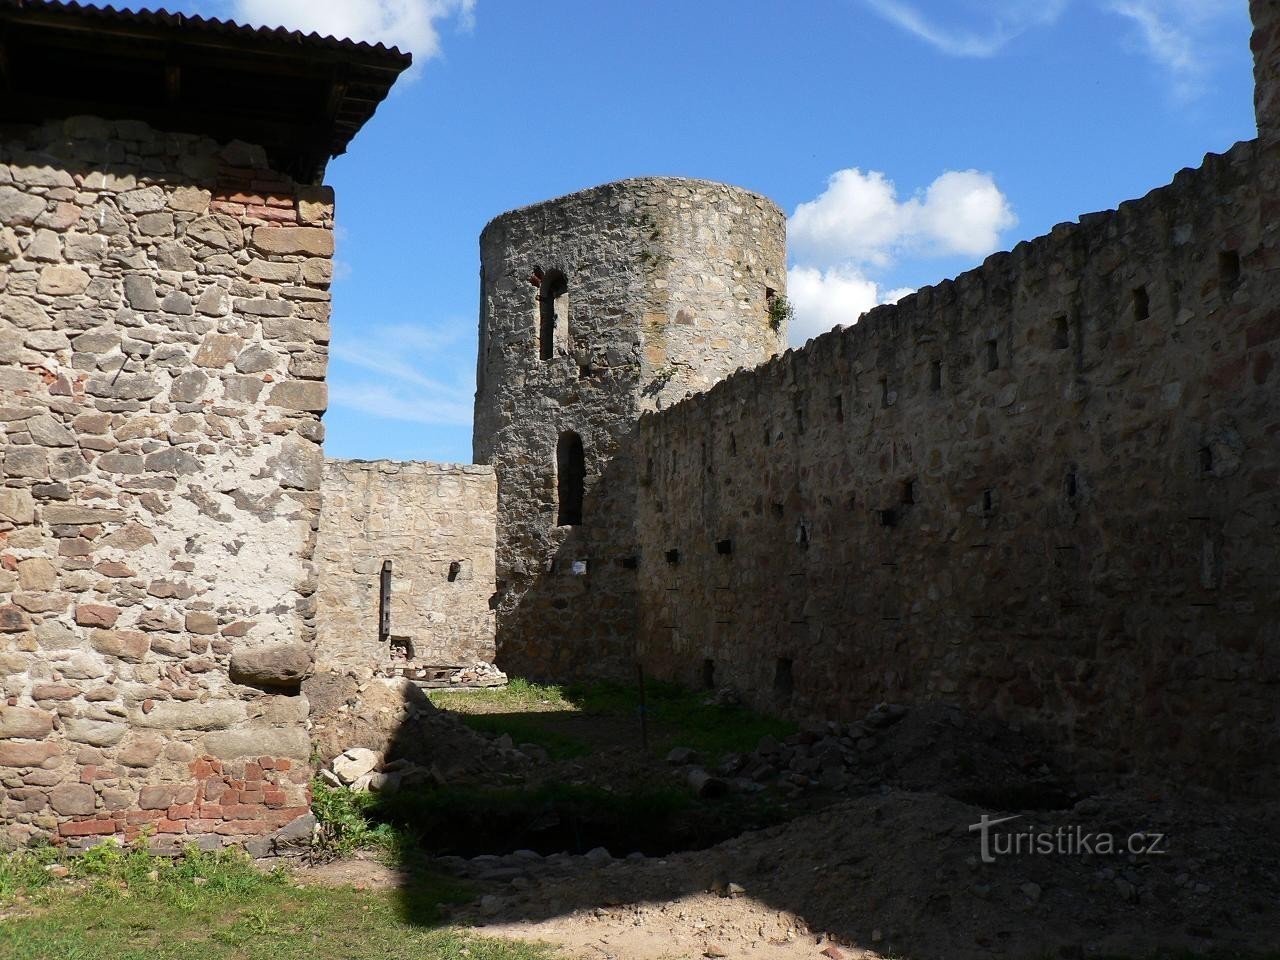 Kestřany, Horní tvrz, muren met een bastion